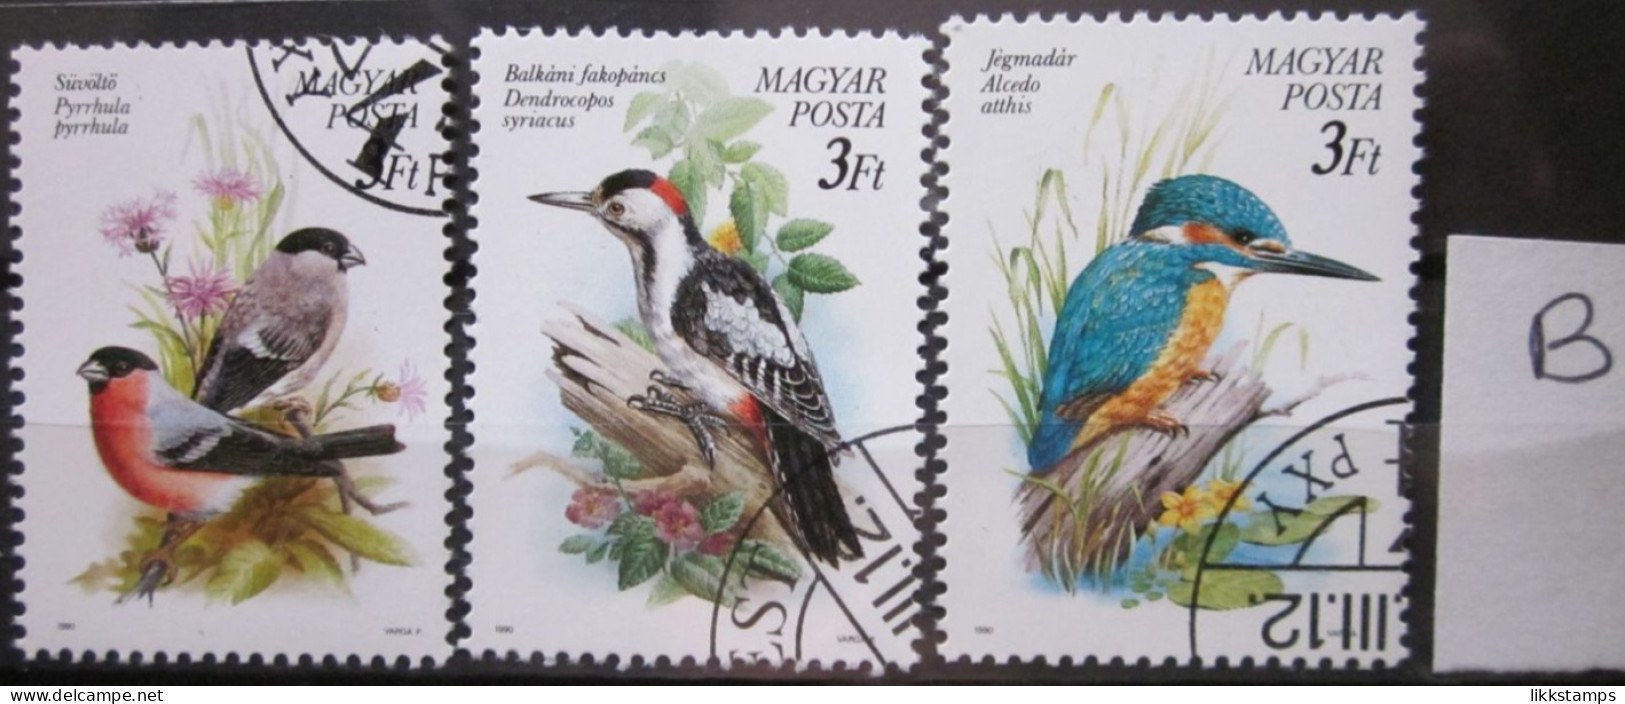 HUNGARY ~ 1990 ~ S.G. NUMBERS 3960 - 3962, ~ 'LOT B' ~ BIRDS. ~ VFU #02795 - Gebraucht